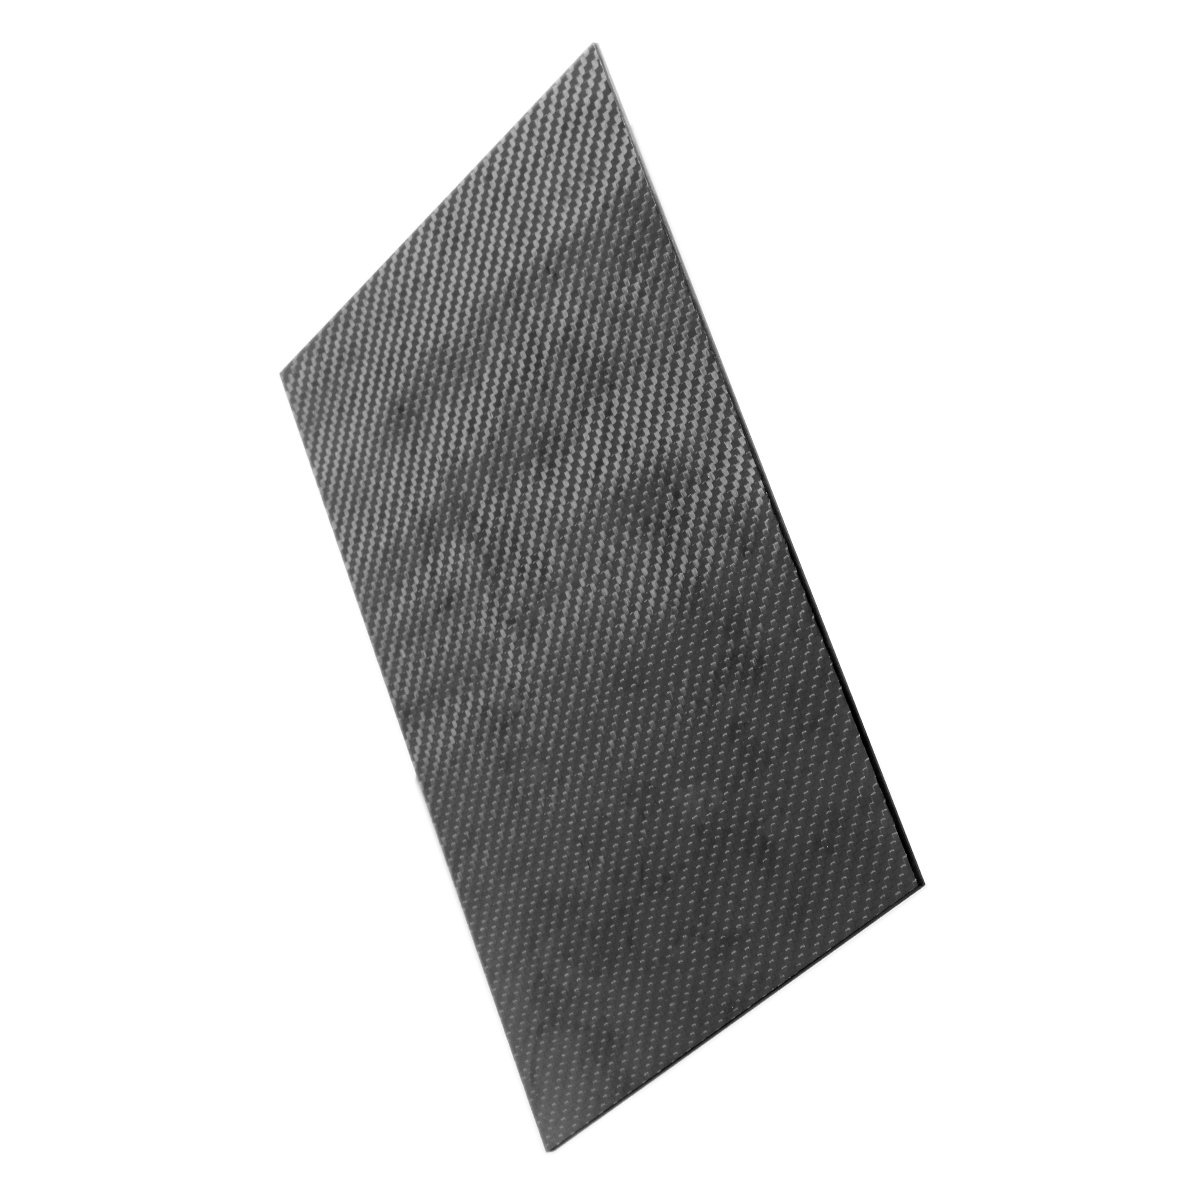 200x300x05-5mm-3K-Black-Twill-Weave-Carbon-Fiber-Plate-Sheet-Glossy-Carbon-Fiber-Board-Panel-High-Co-1483986-2